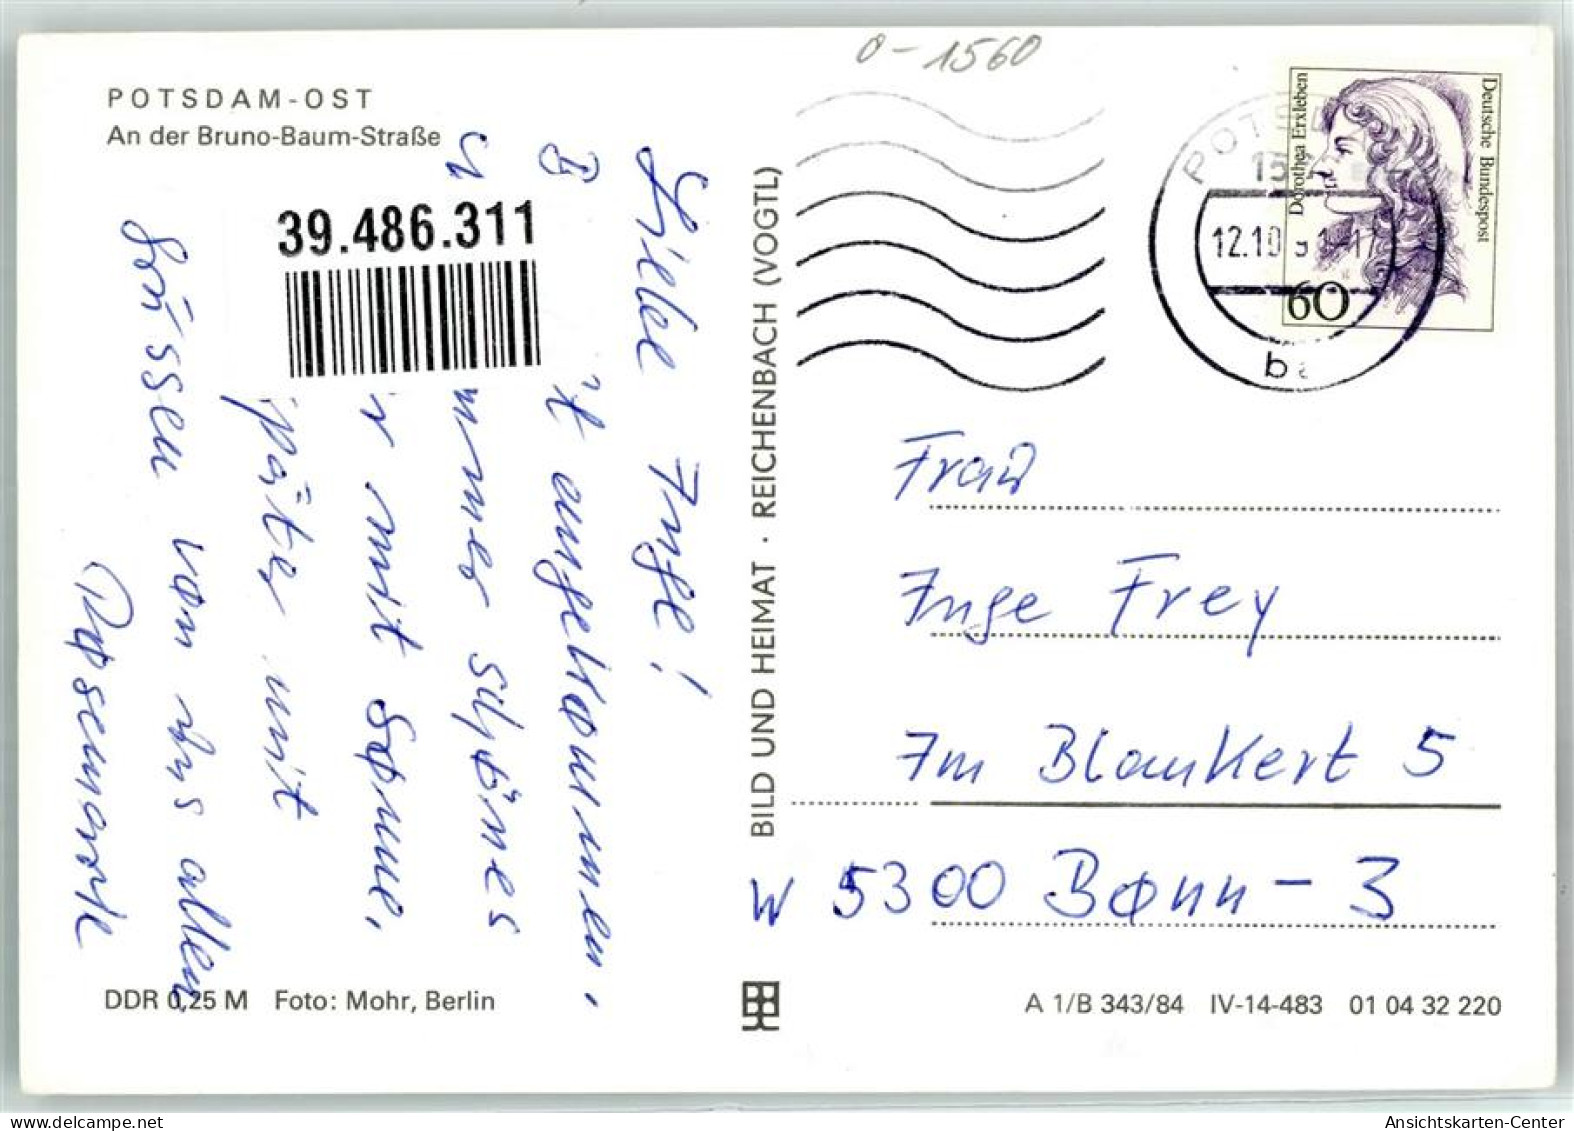 39486311 - Potsdam - Potsdam